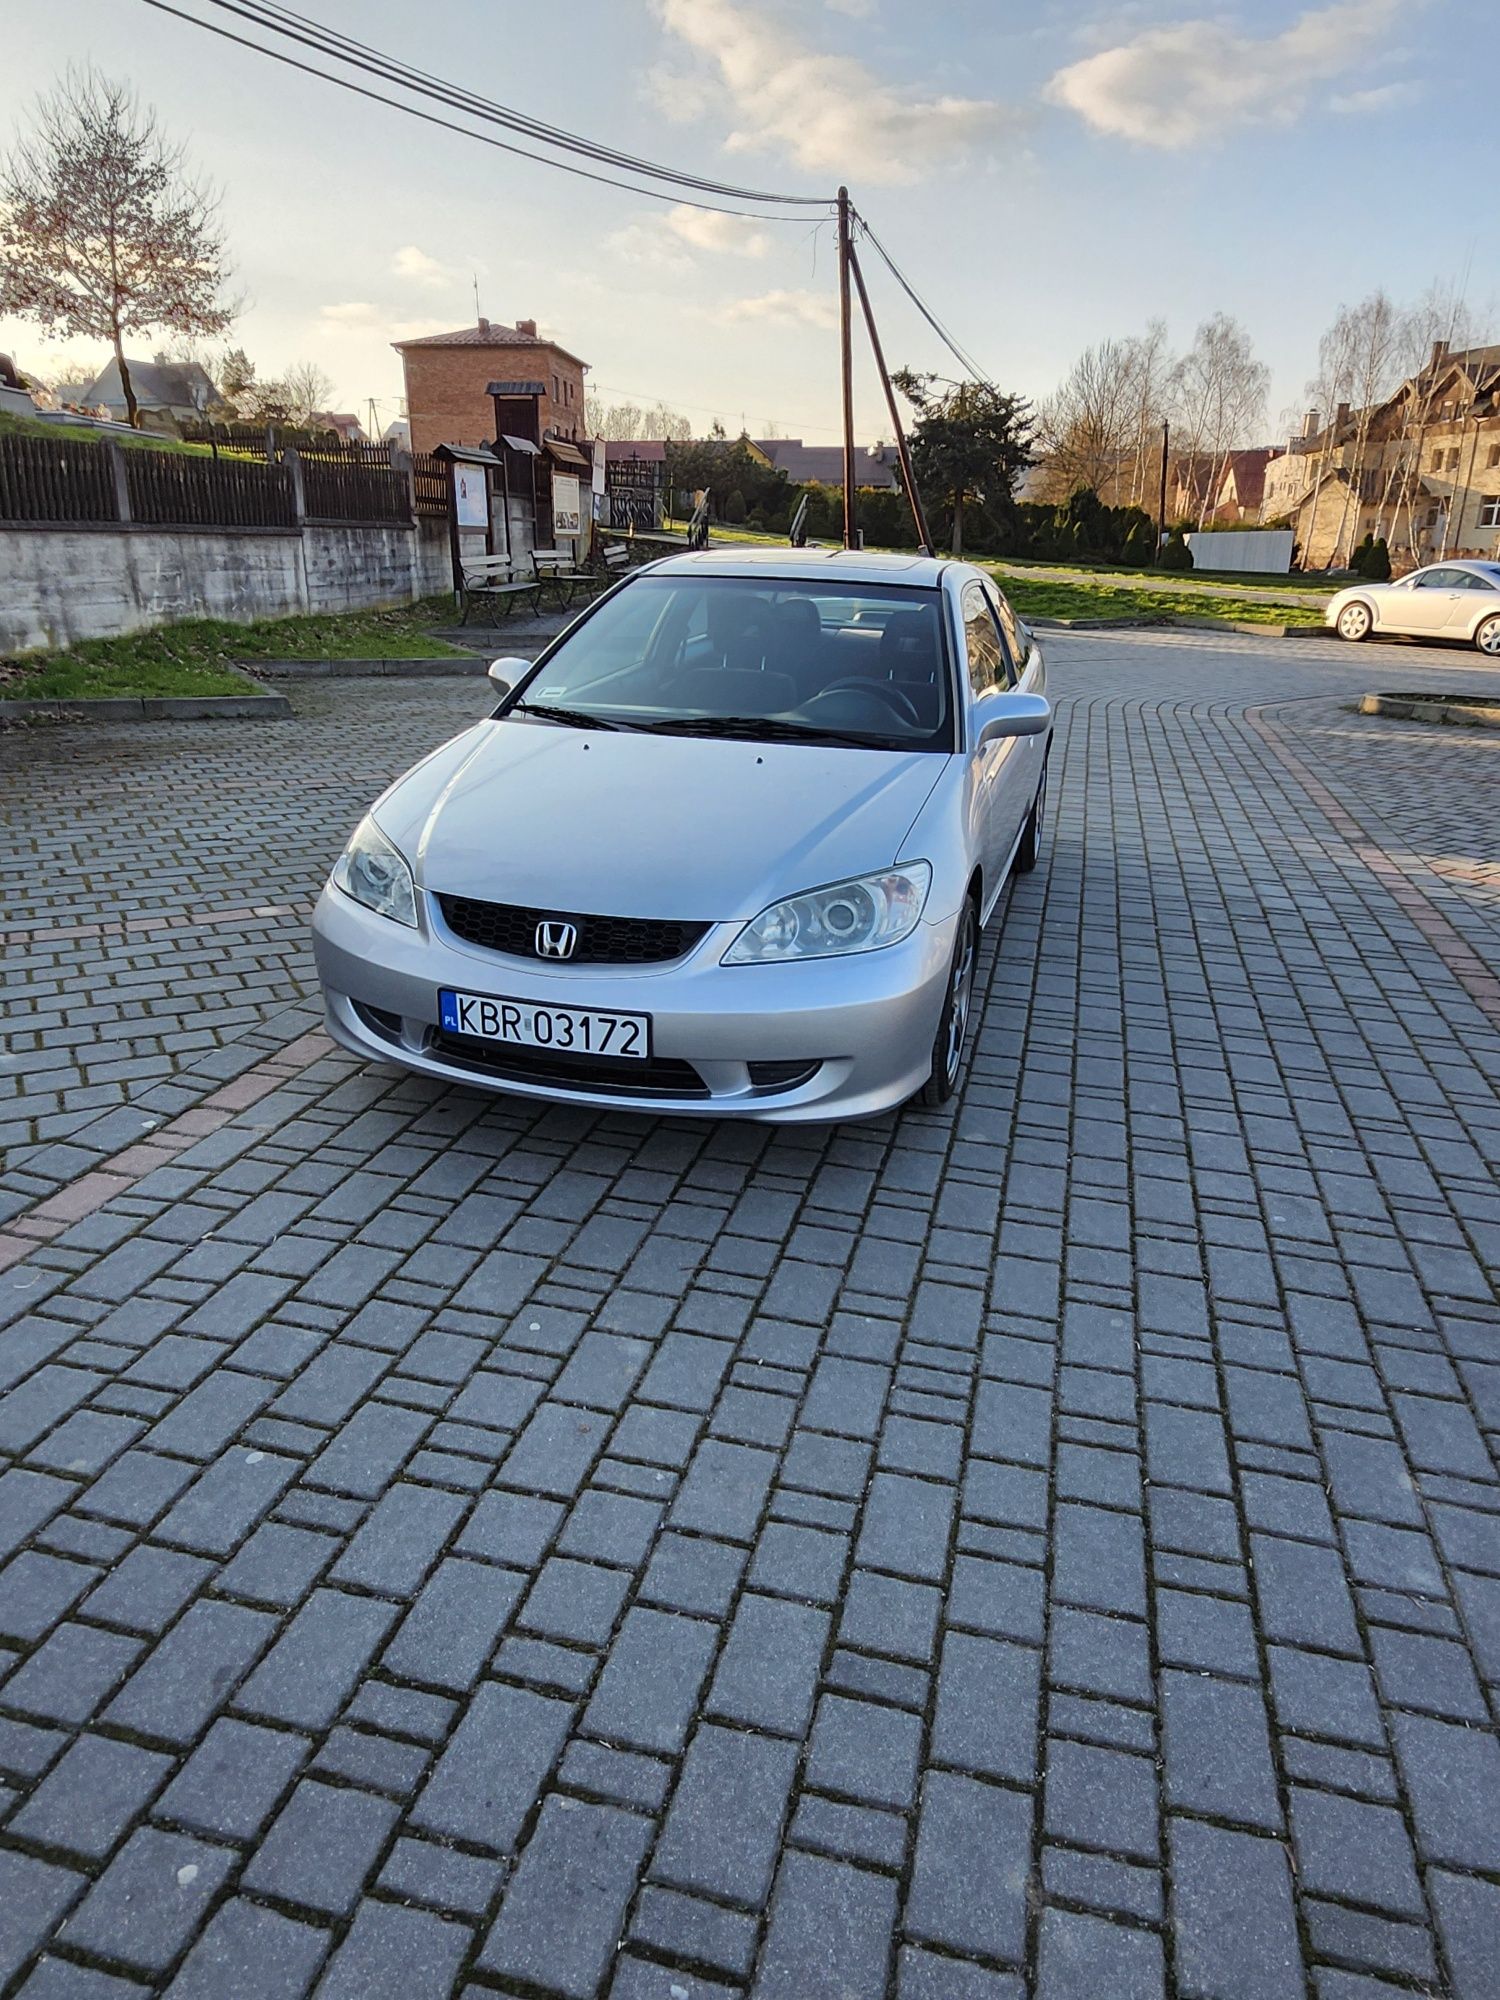 Honda civic vii 1.7 coupe